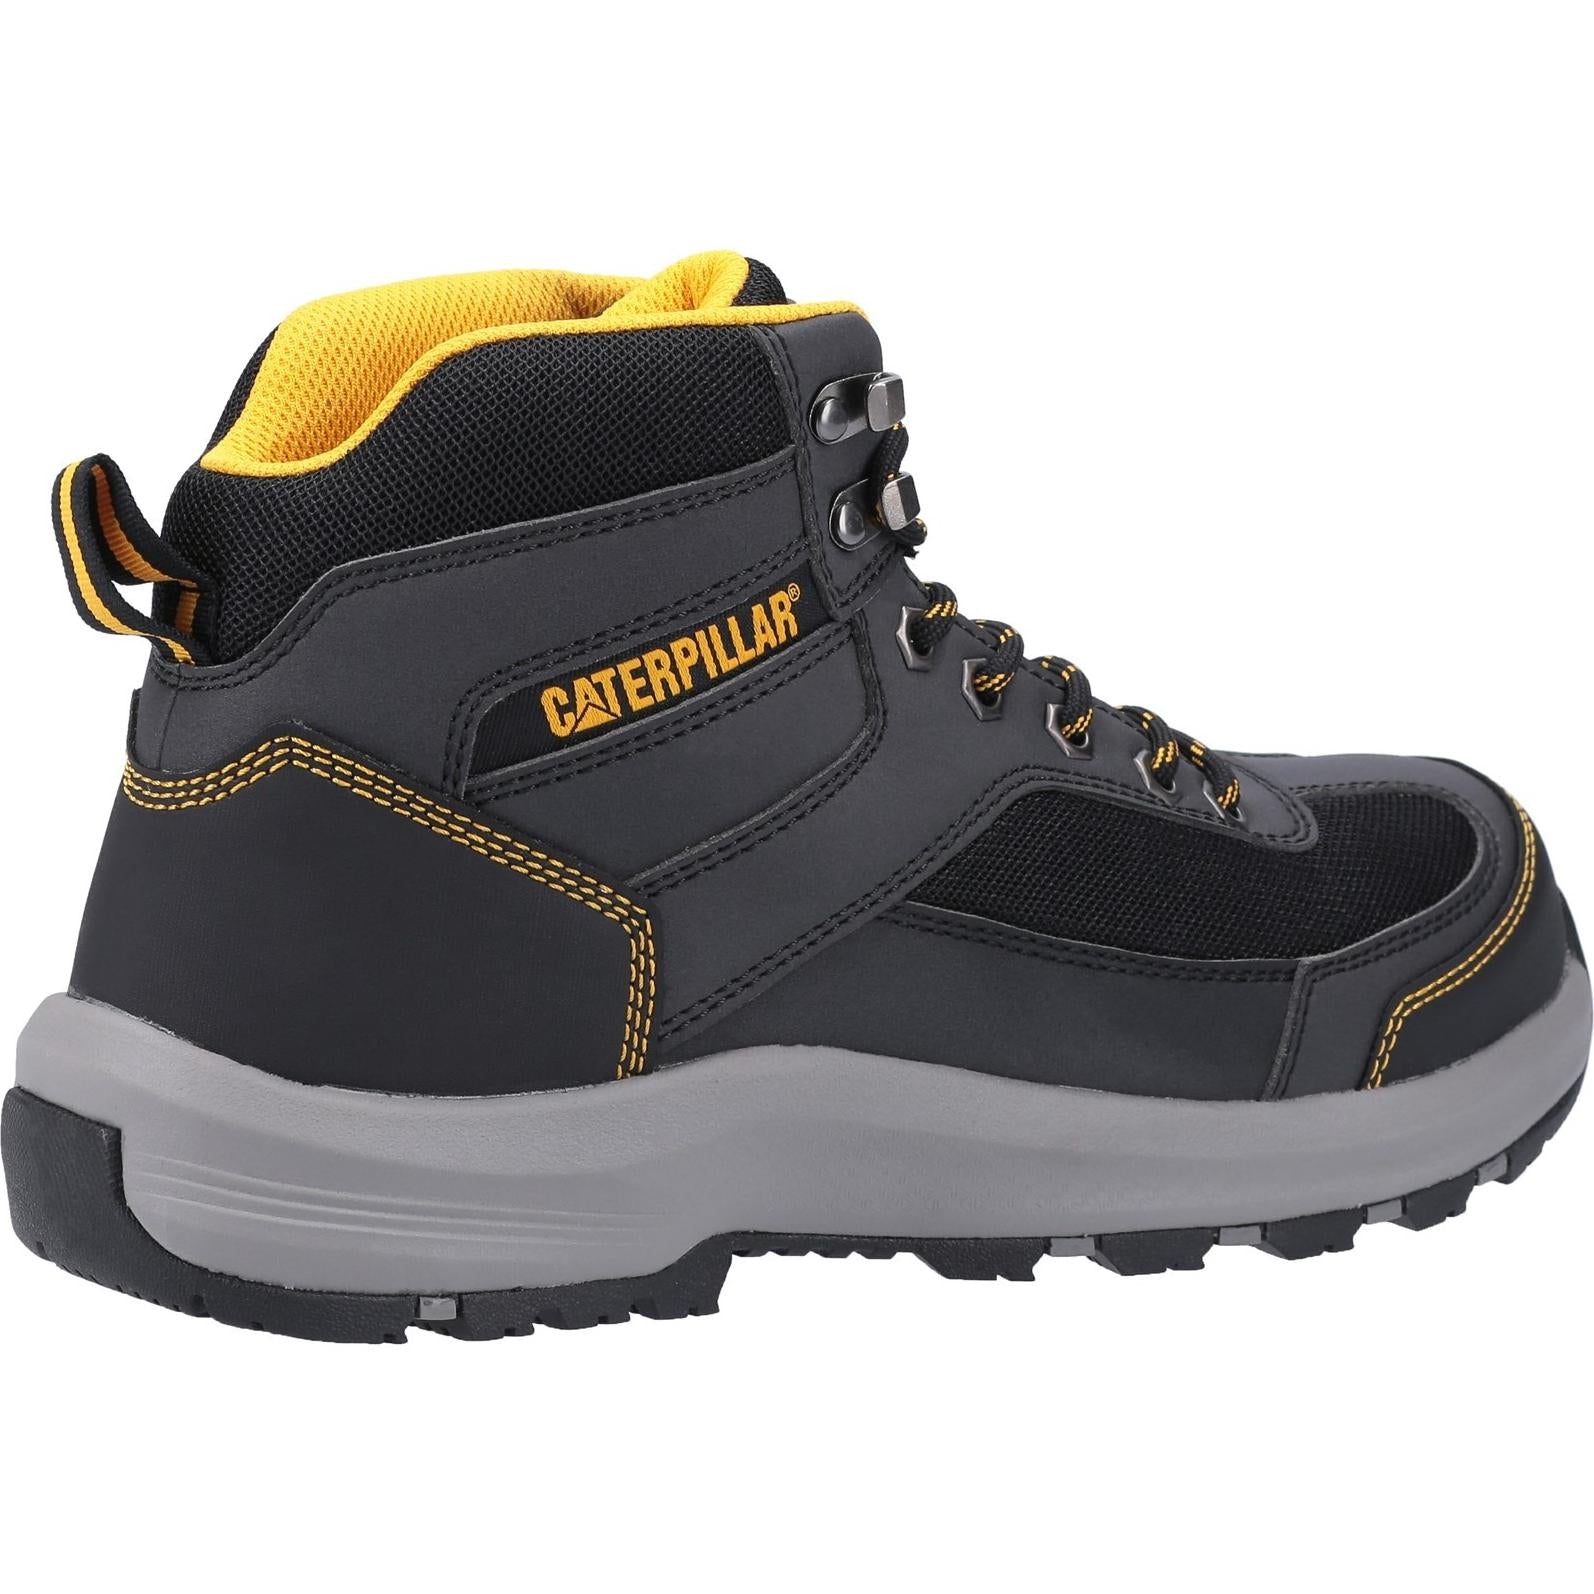 Caterpillar Elmore Mid Safety Hiker Boots